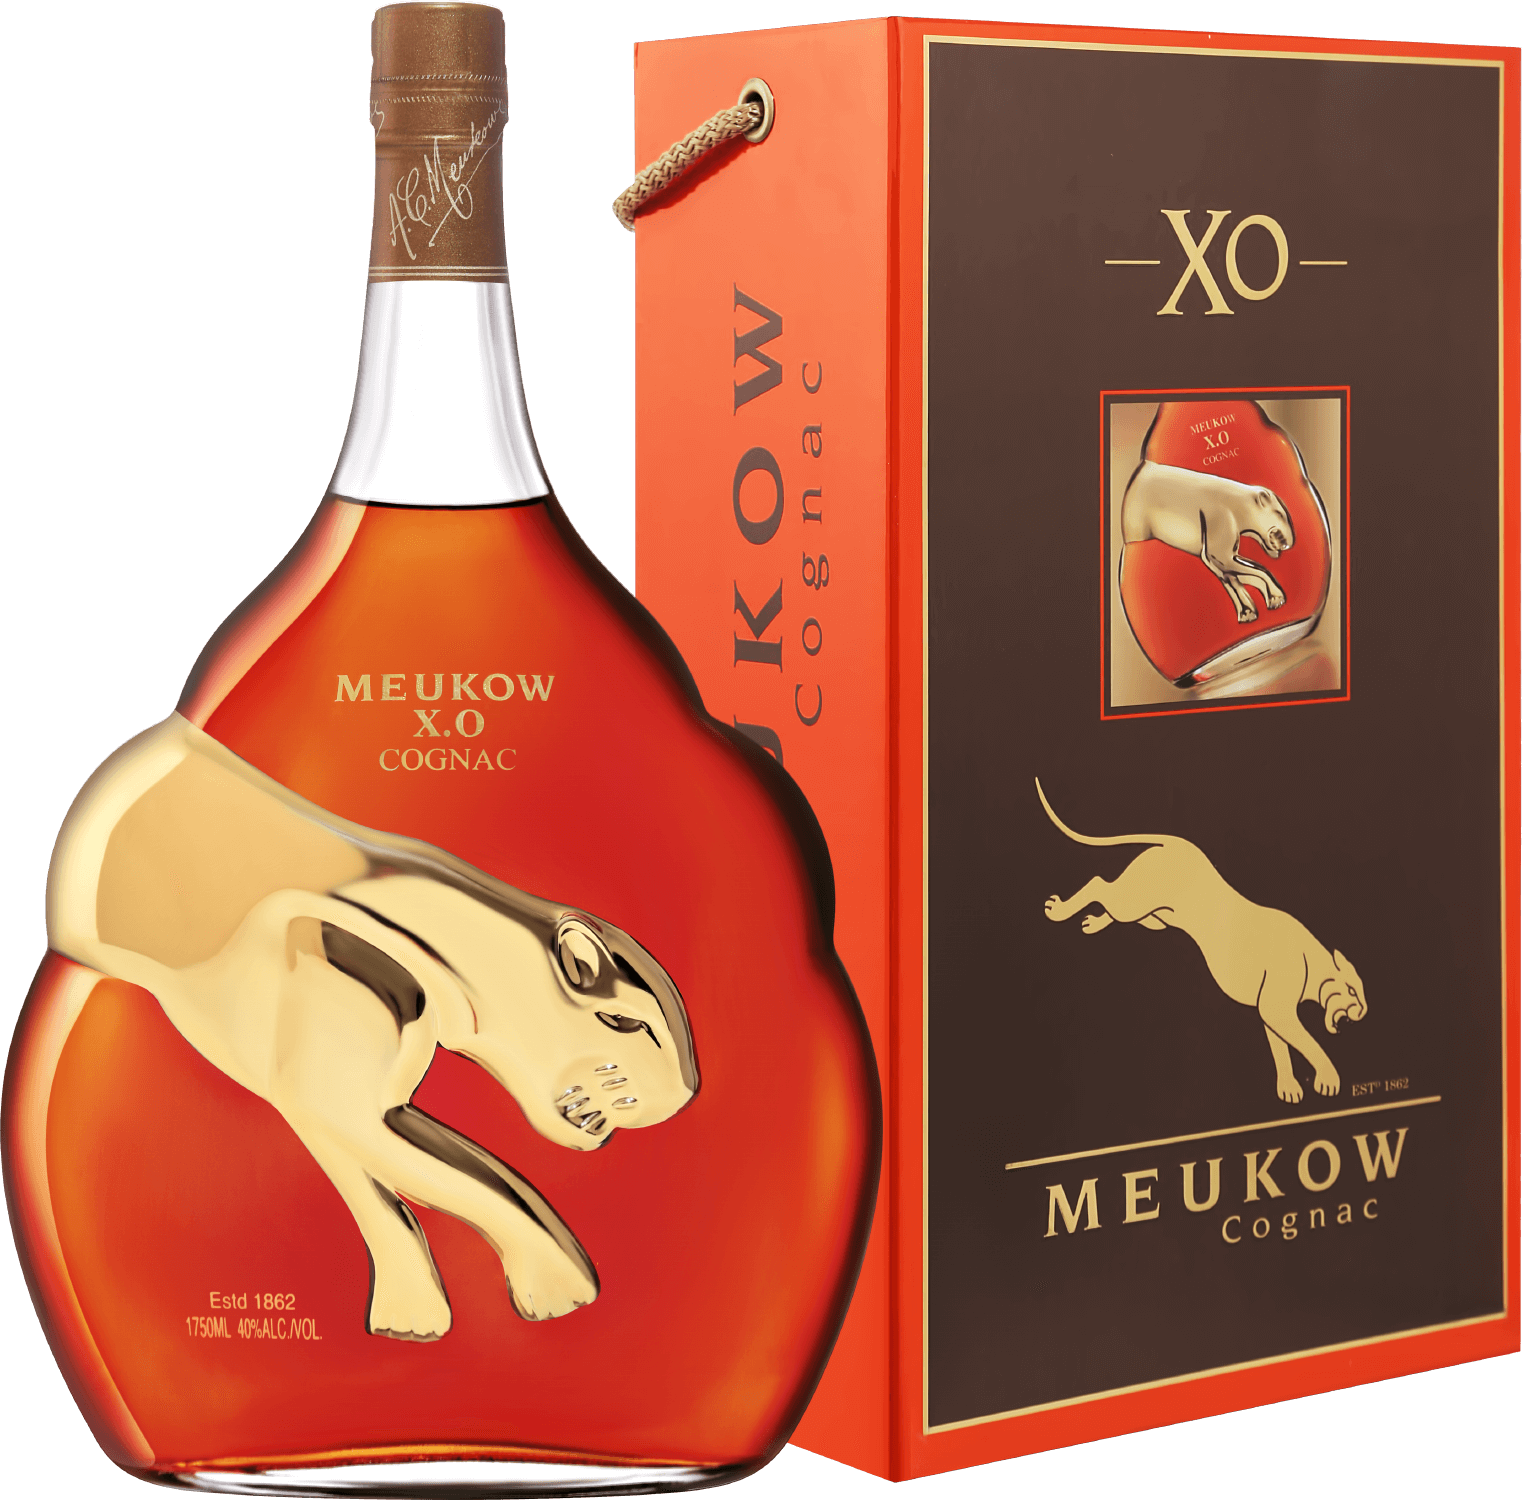 Meukow Cognac XO (gift box) meukow cognac vs gift box